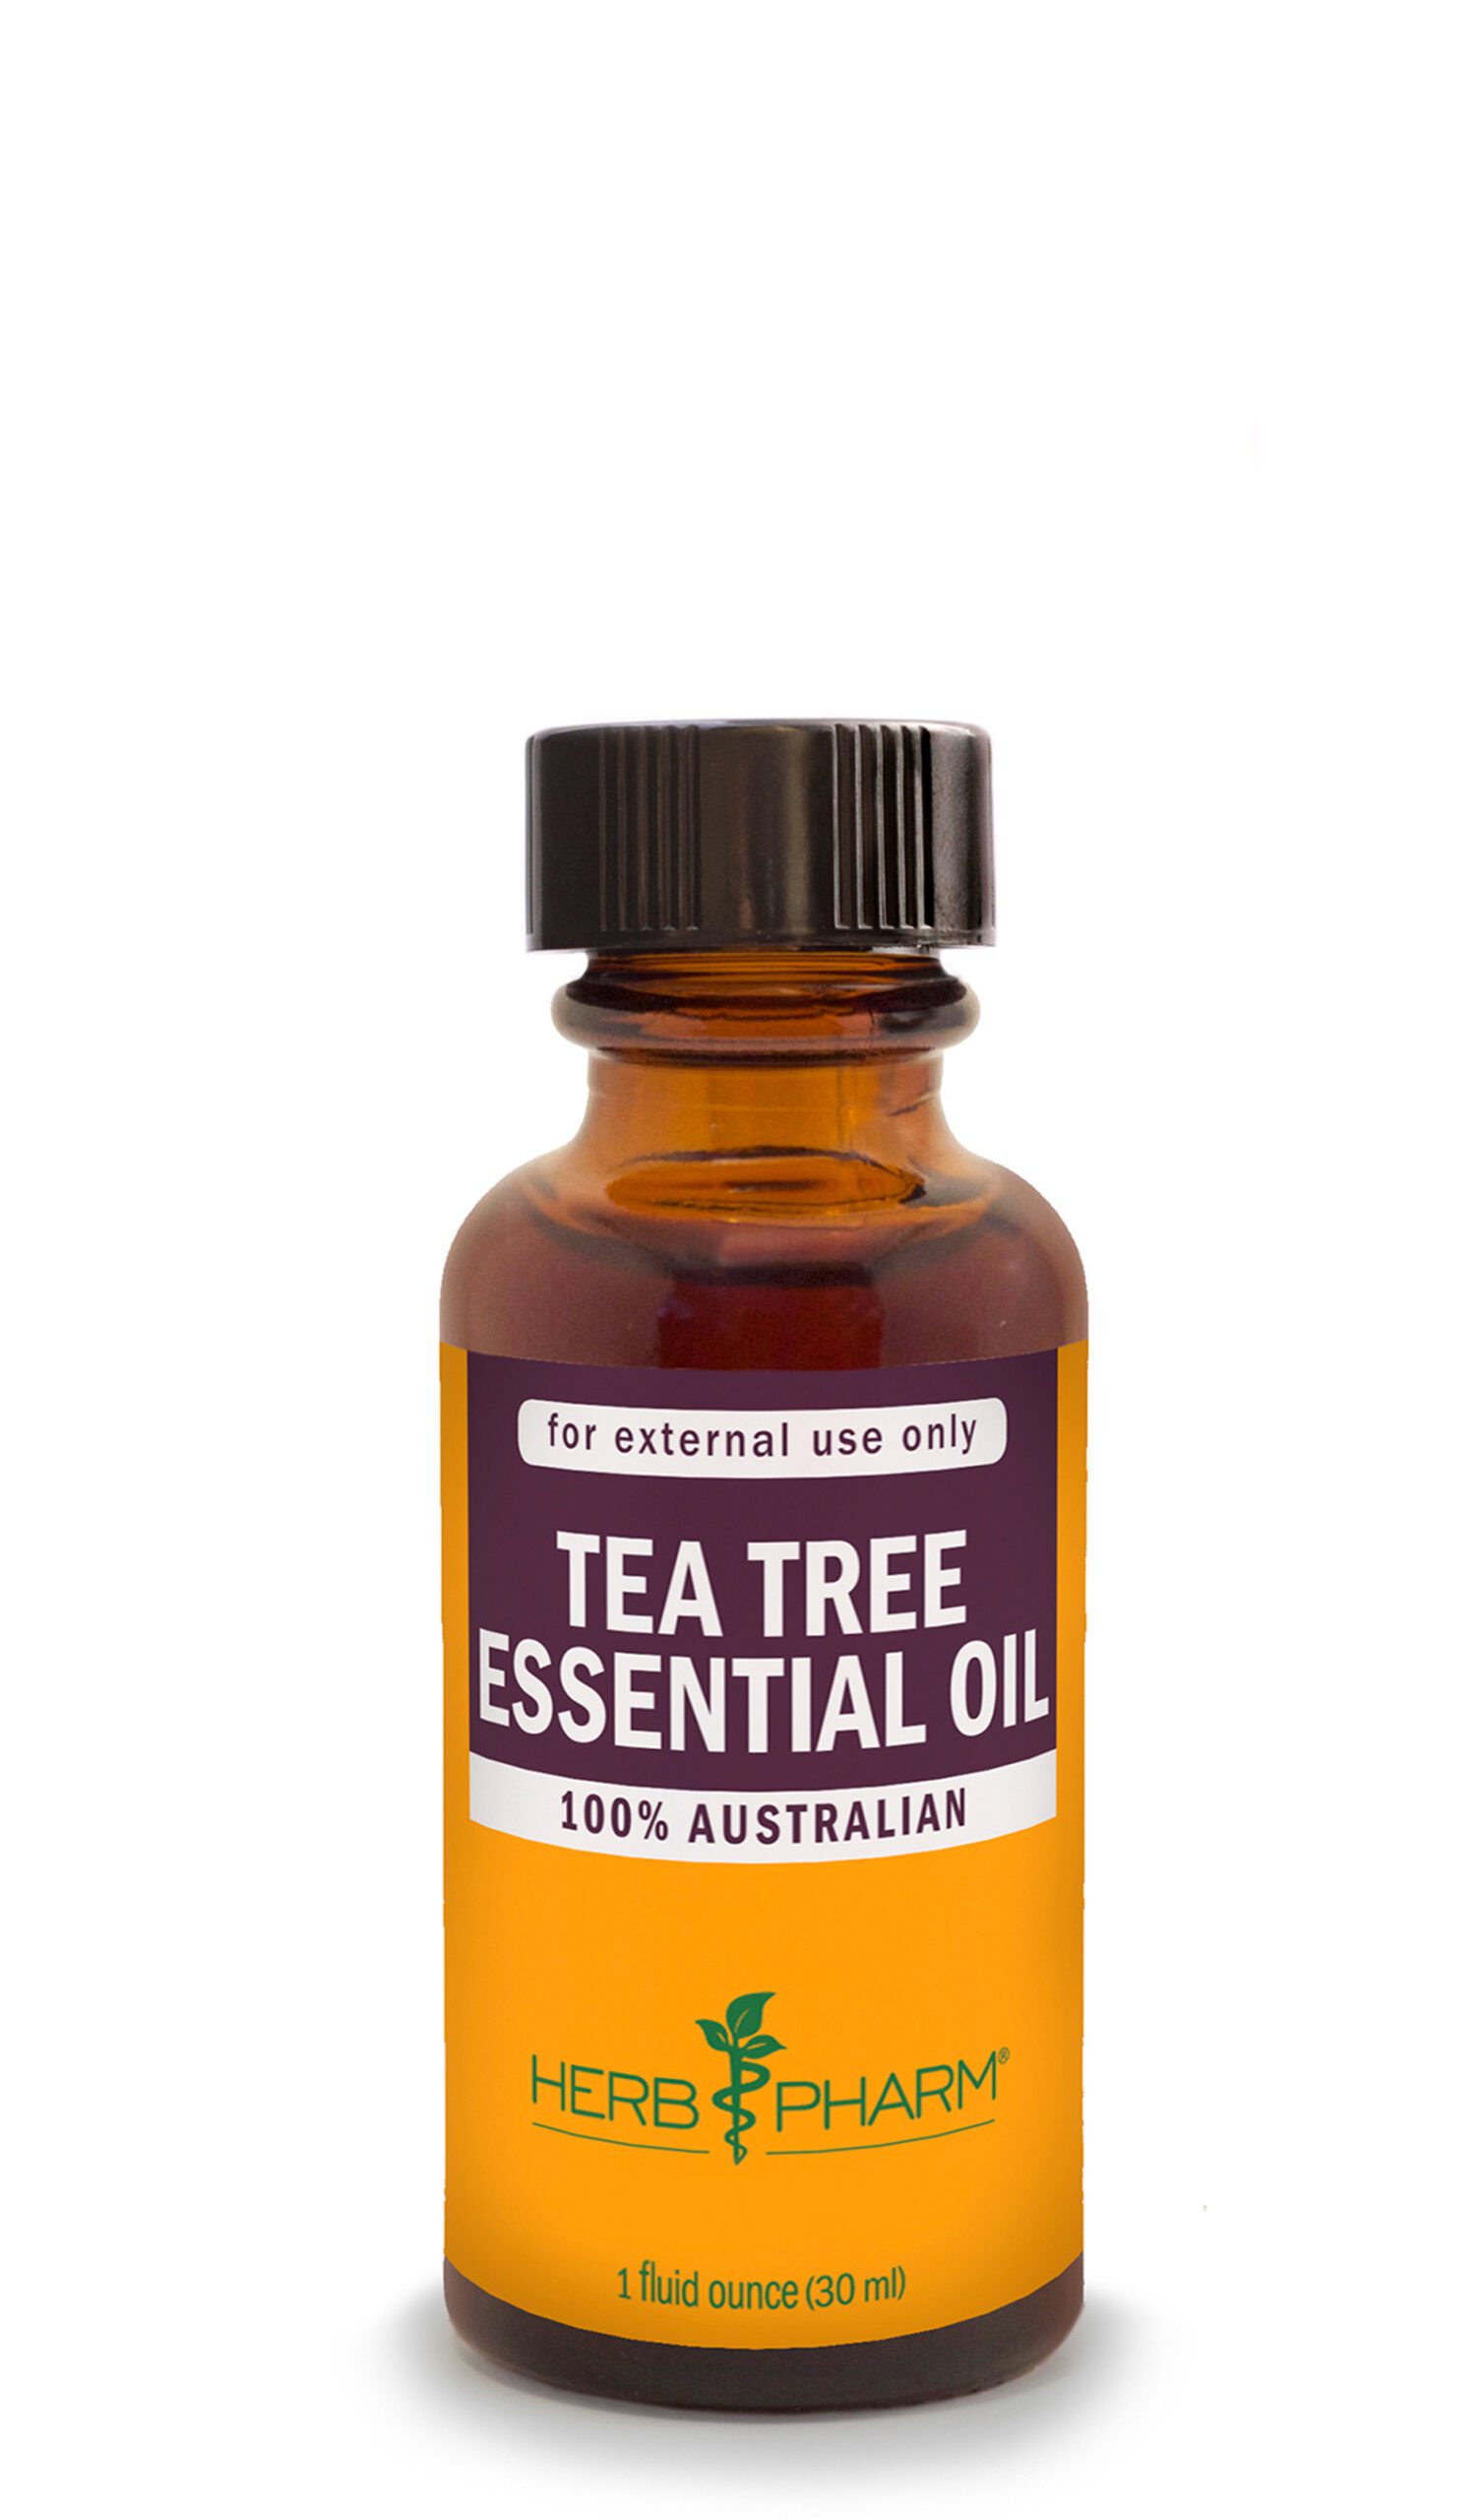 Product Listing Image for Herb Pharm Tea Tree Essential Oil 1oz